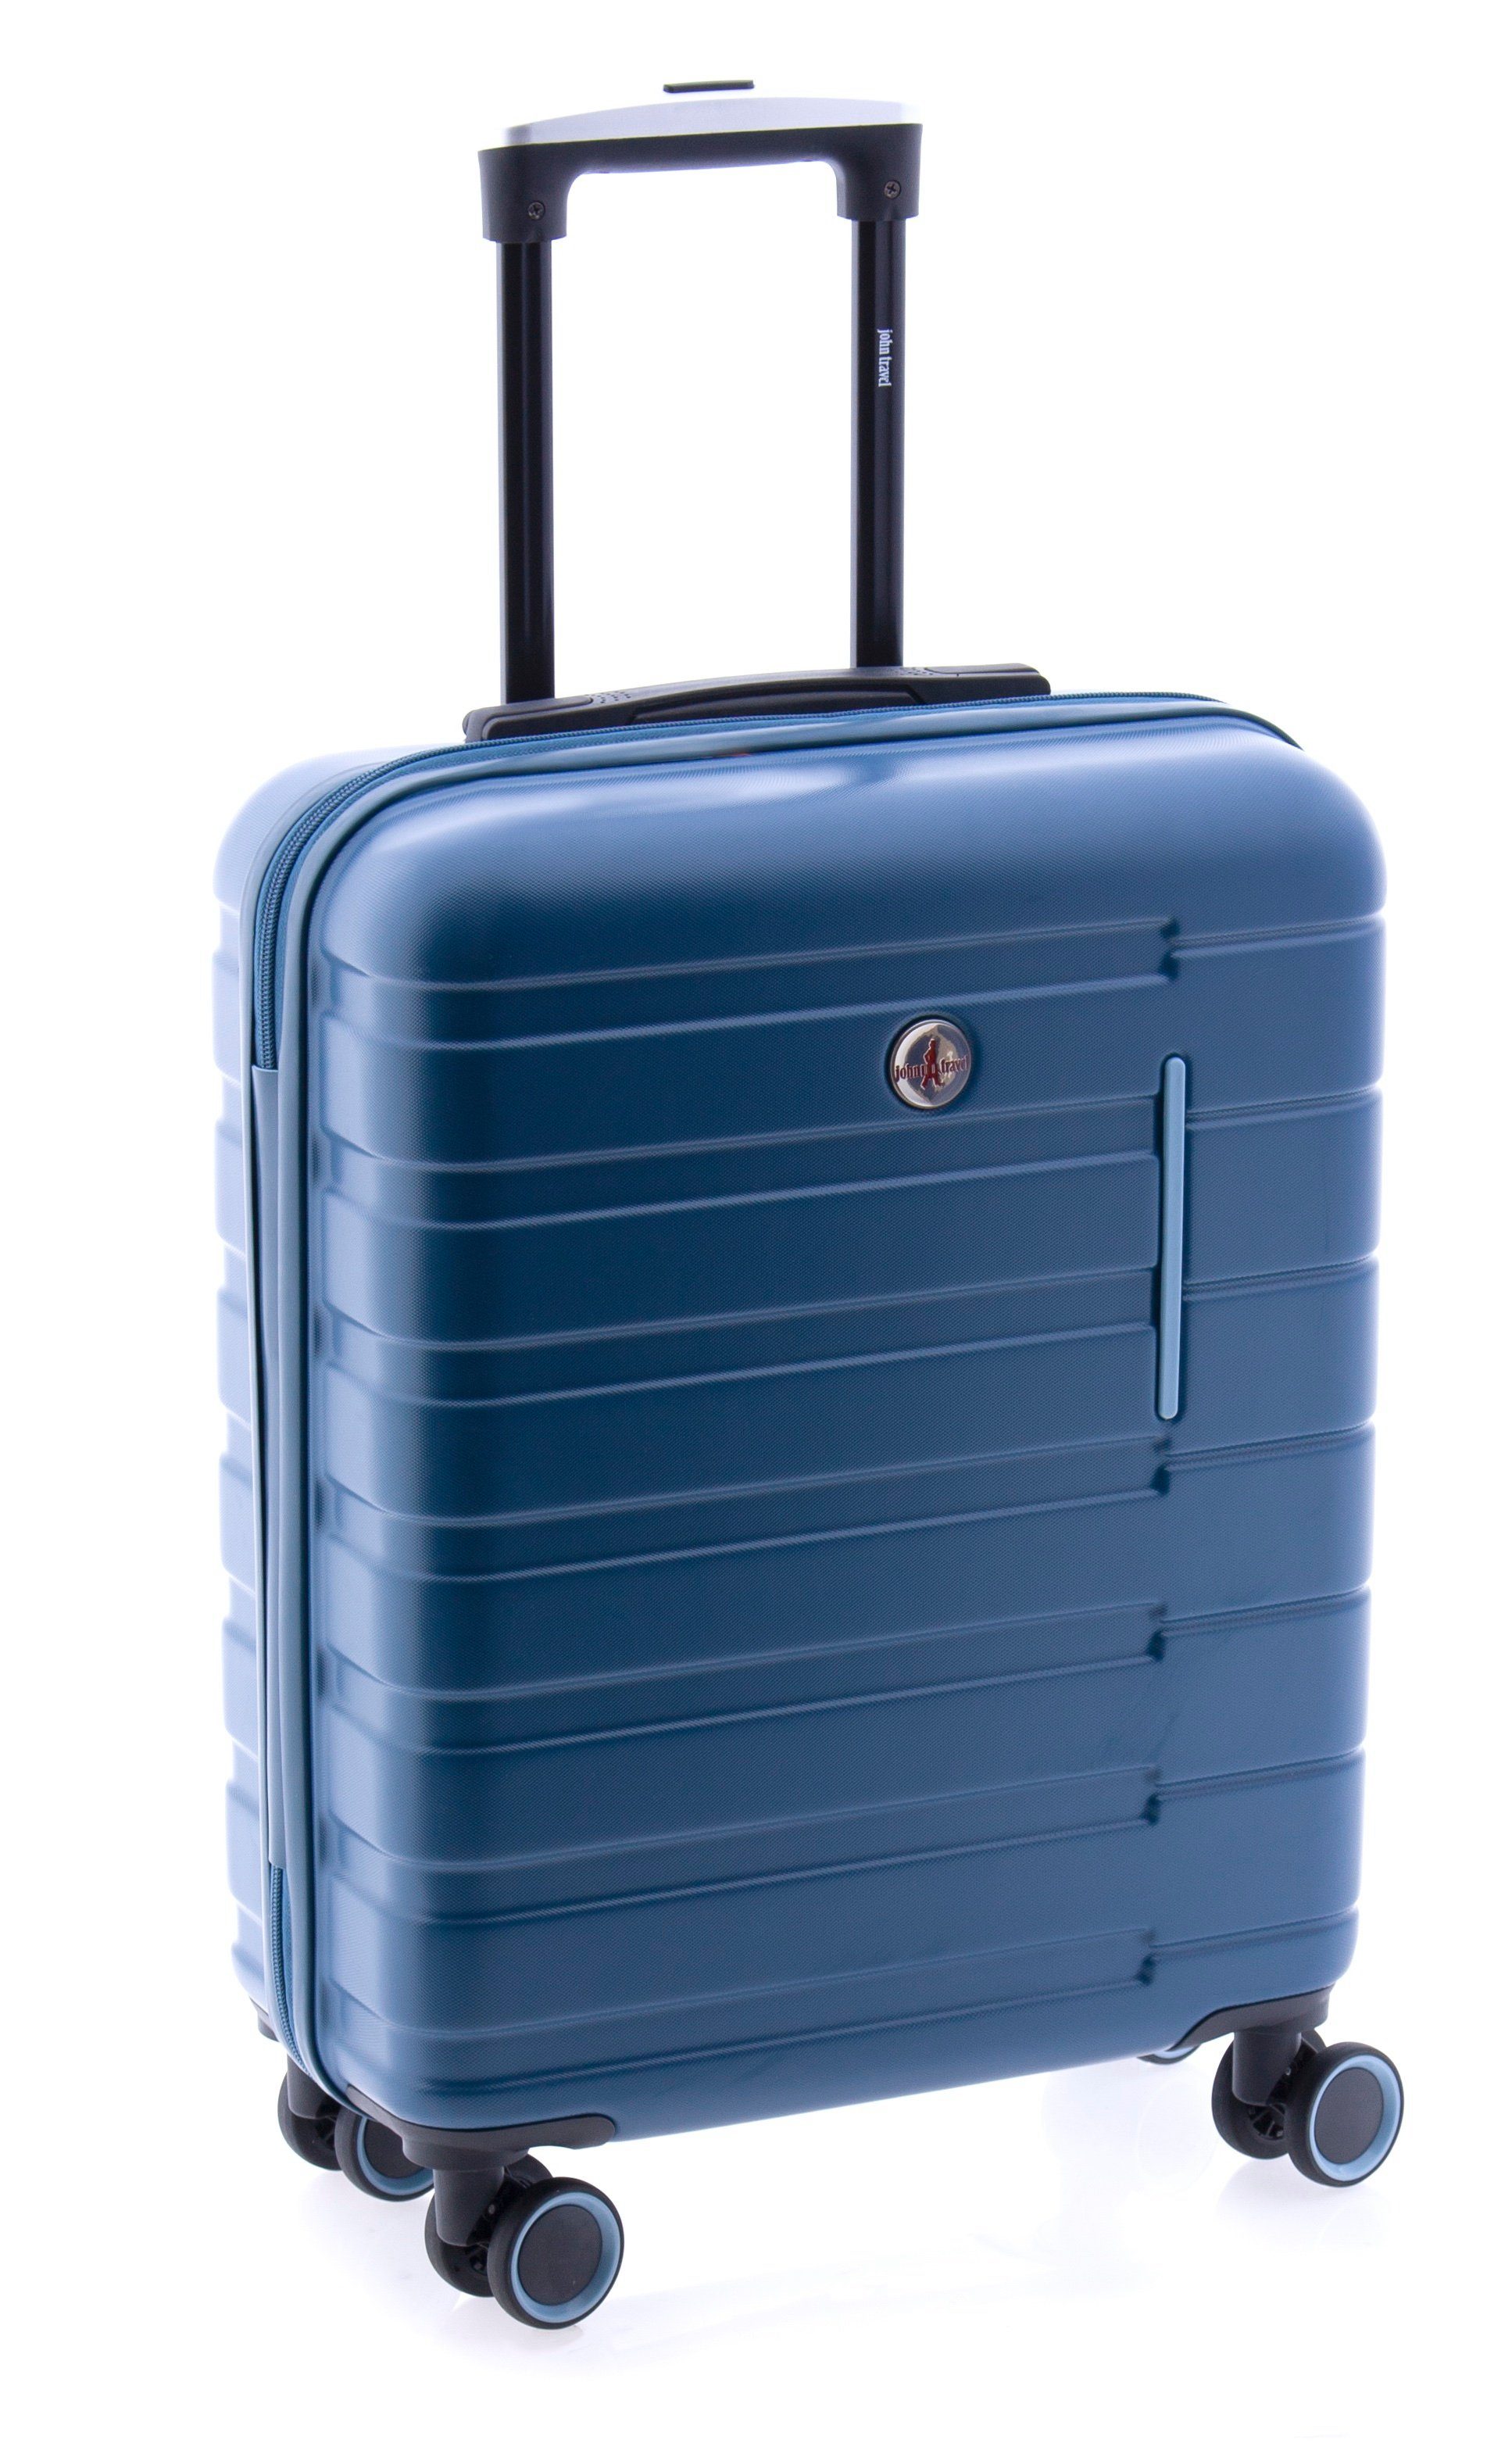 Rollen 4 - GLADIATOR 55cm - Handgepäck-Trolley blau Koffer